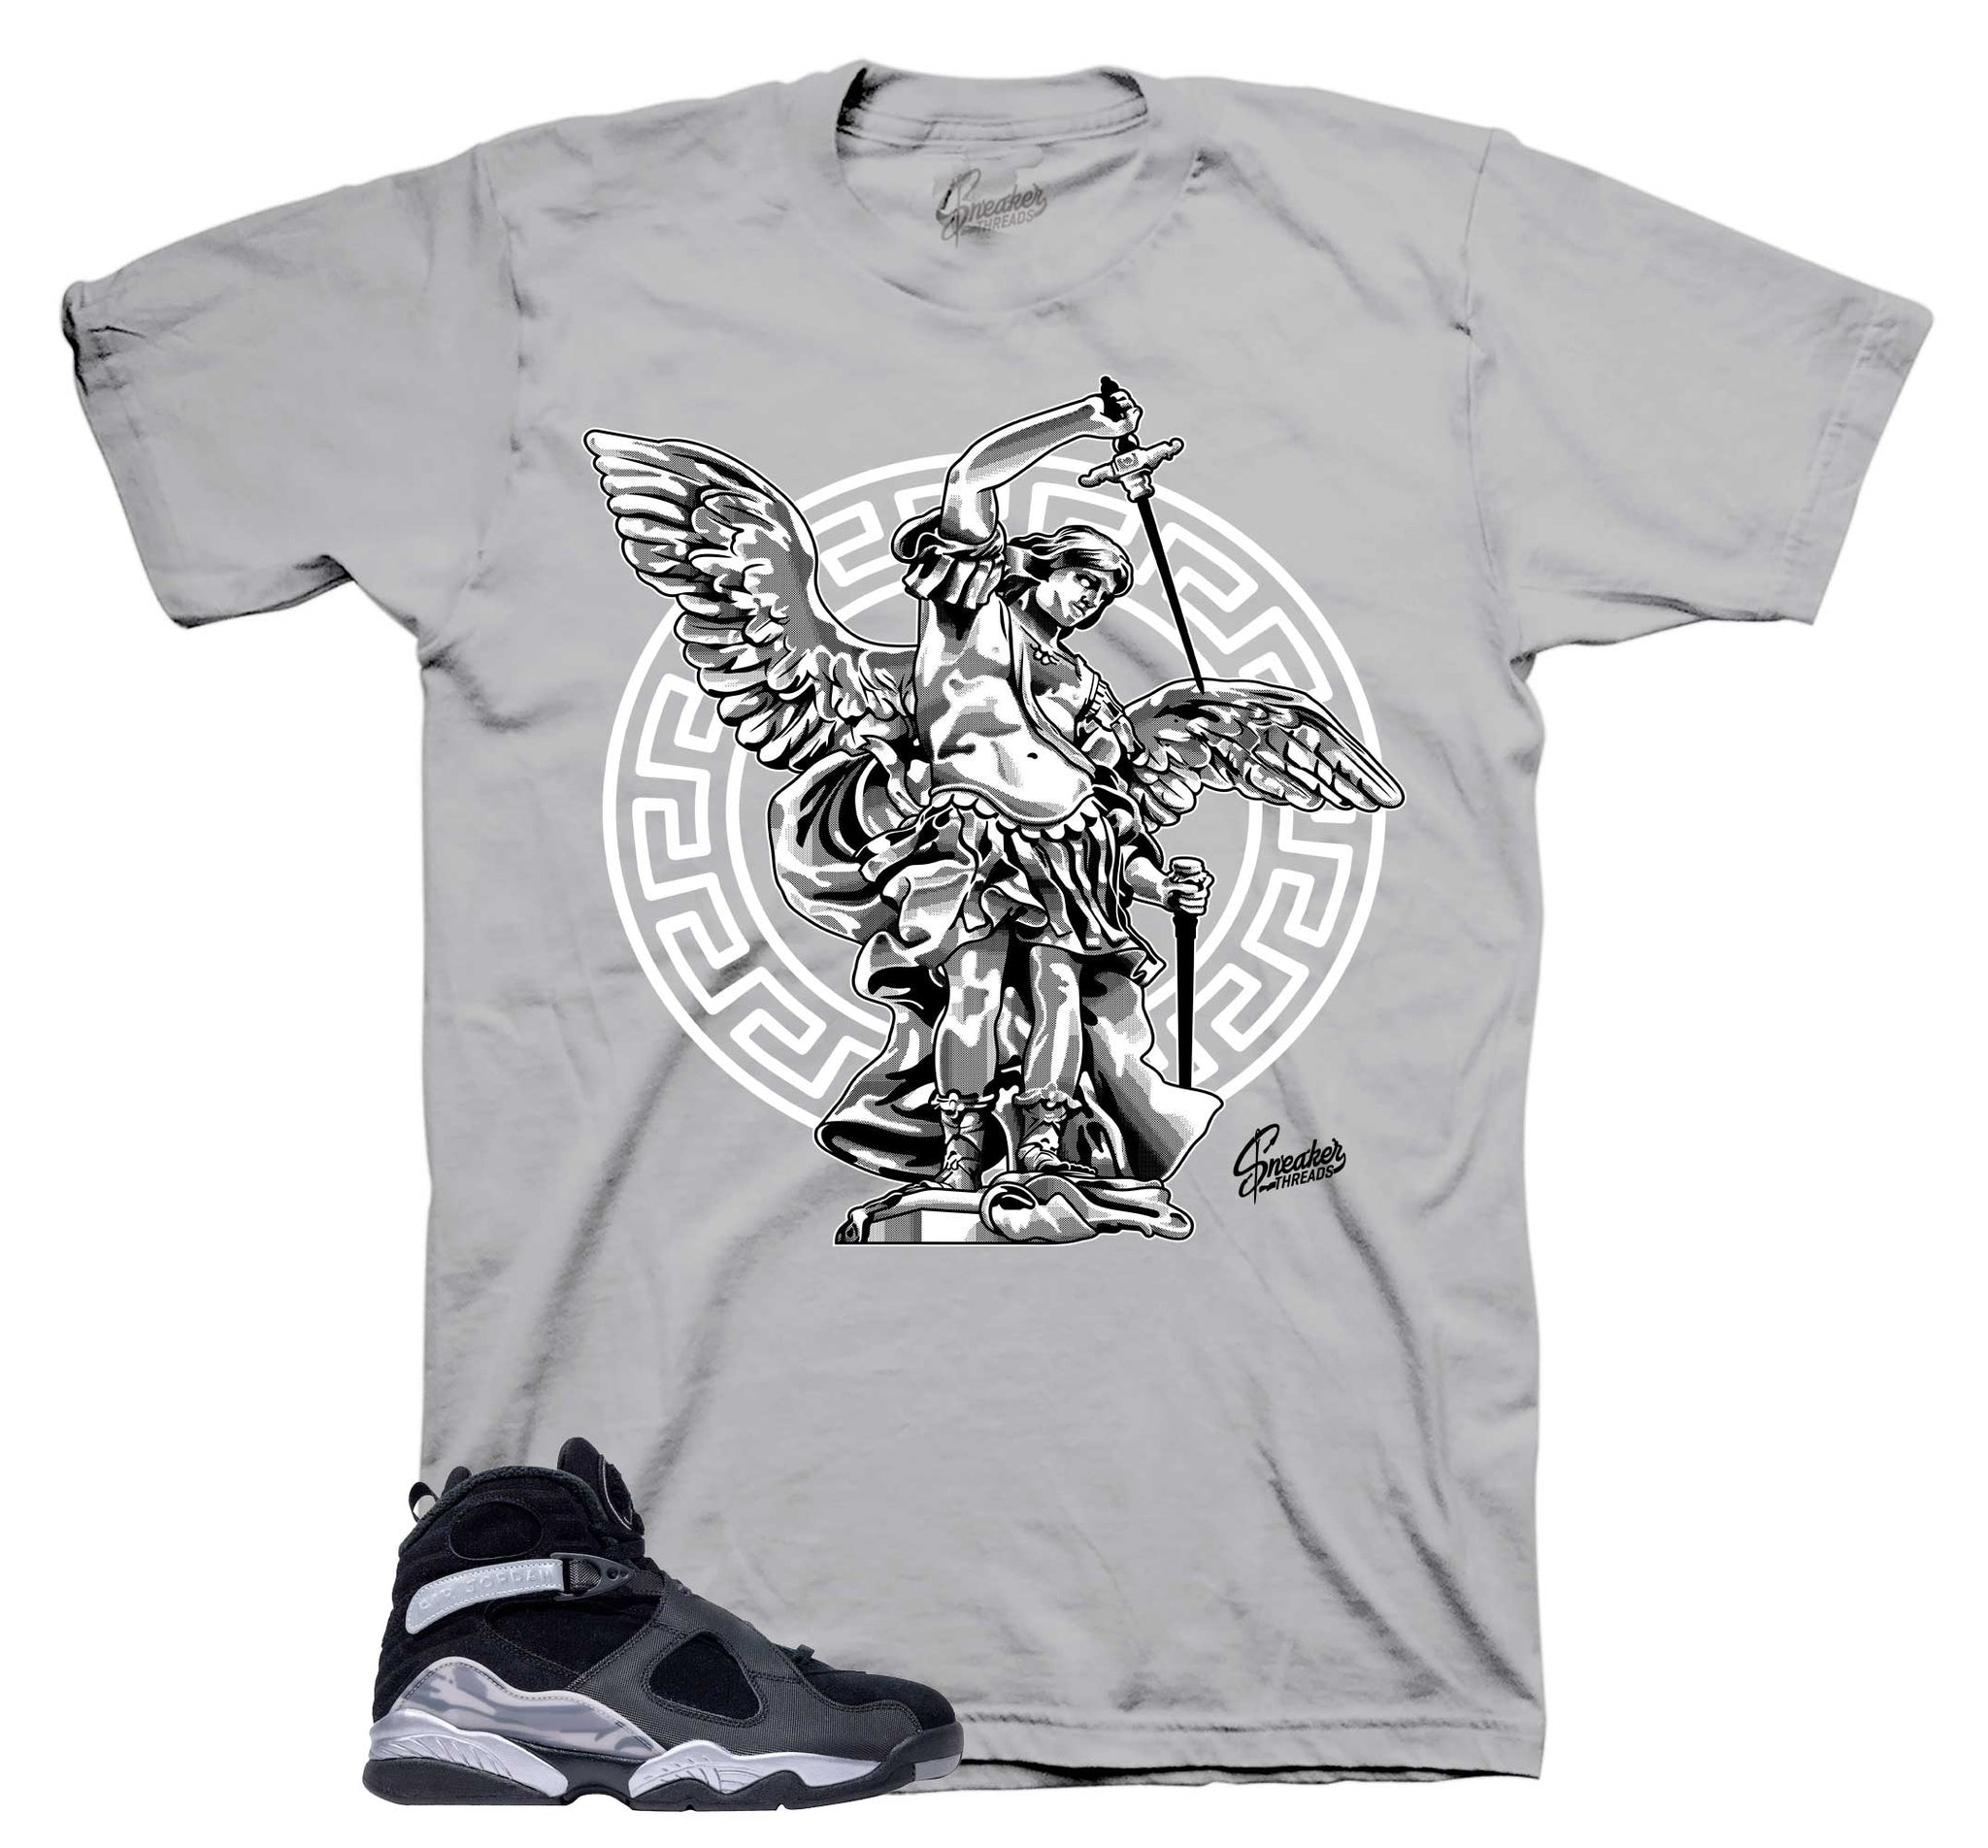 Retro 8 Gunsmoke Shirt - St. Micheal - Silver